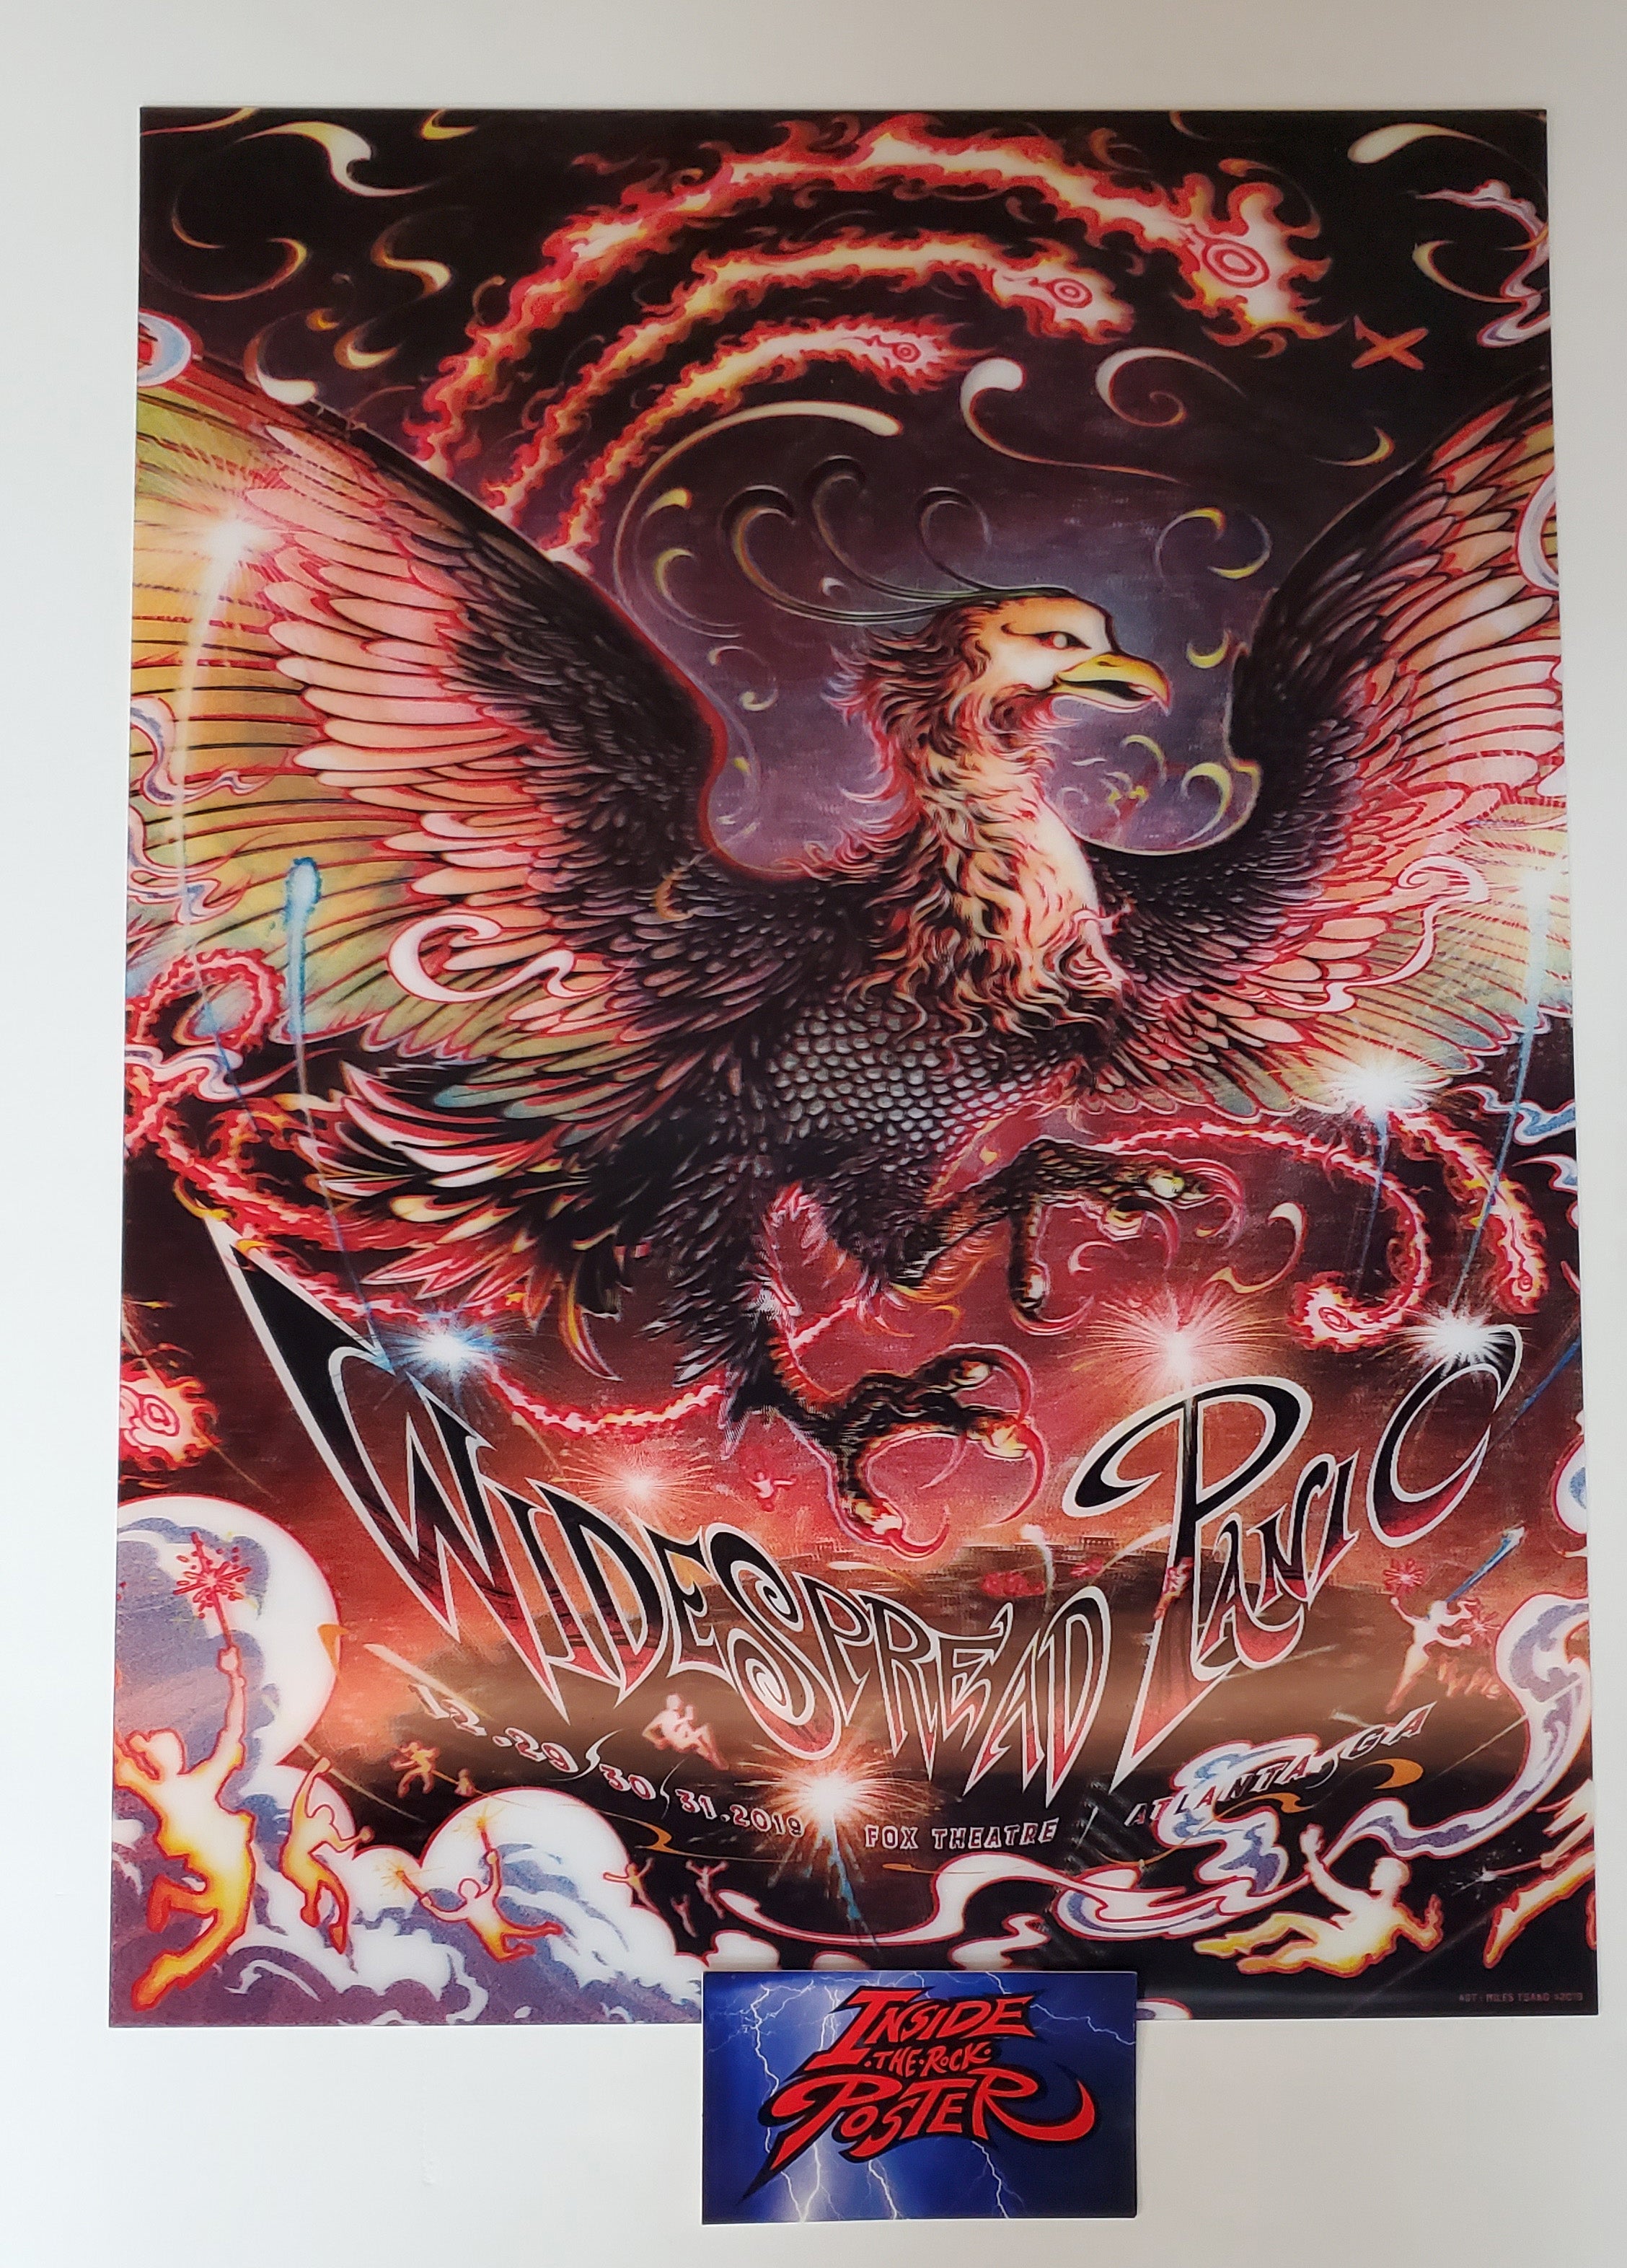 Miles Tsang Widespread Panic Atlanta Poster 2019 New Years Eve | Inside ...